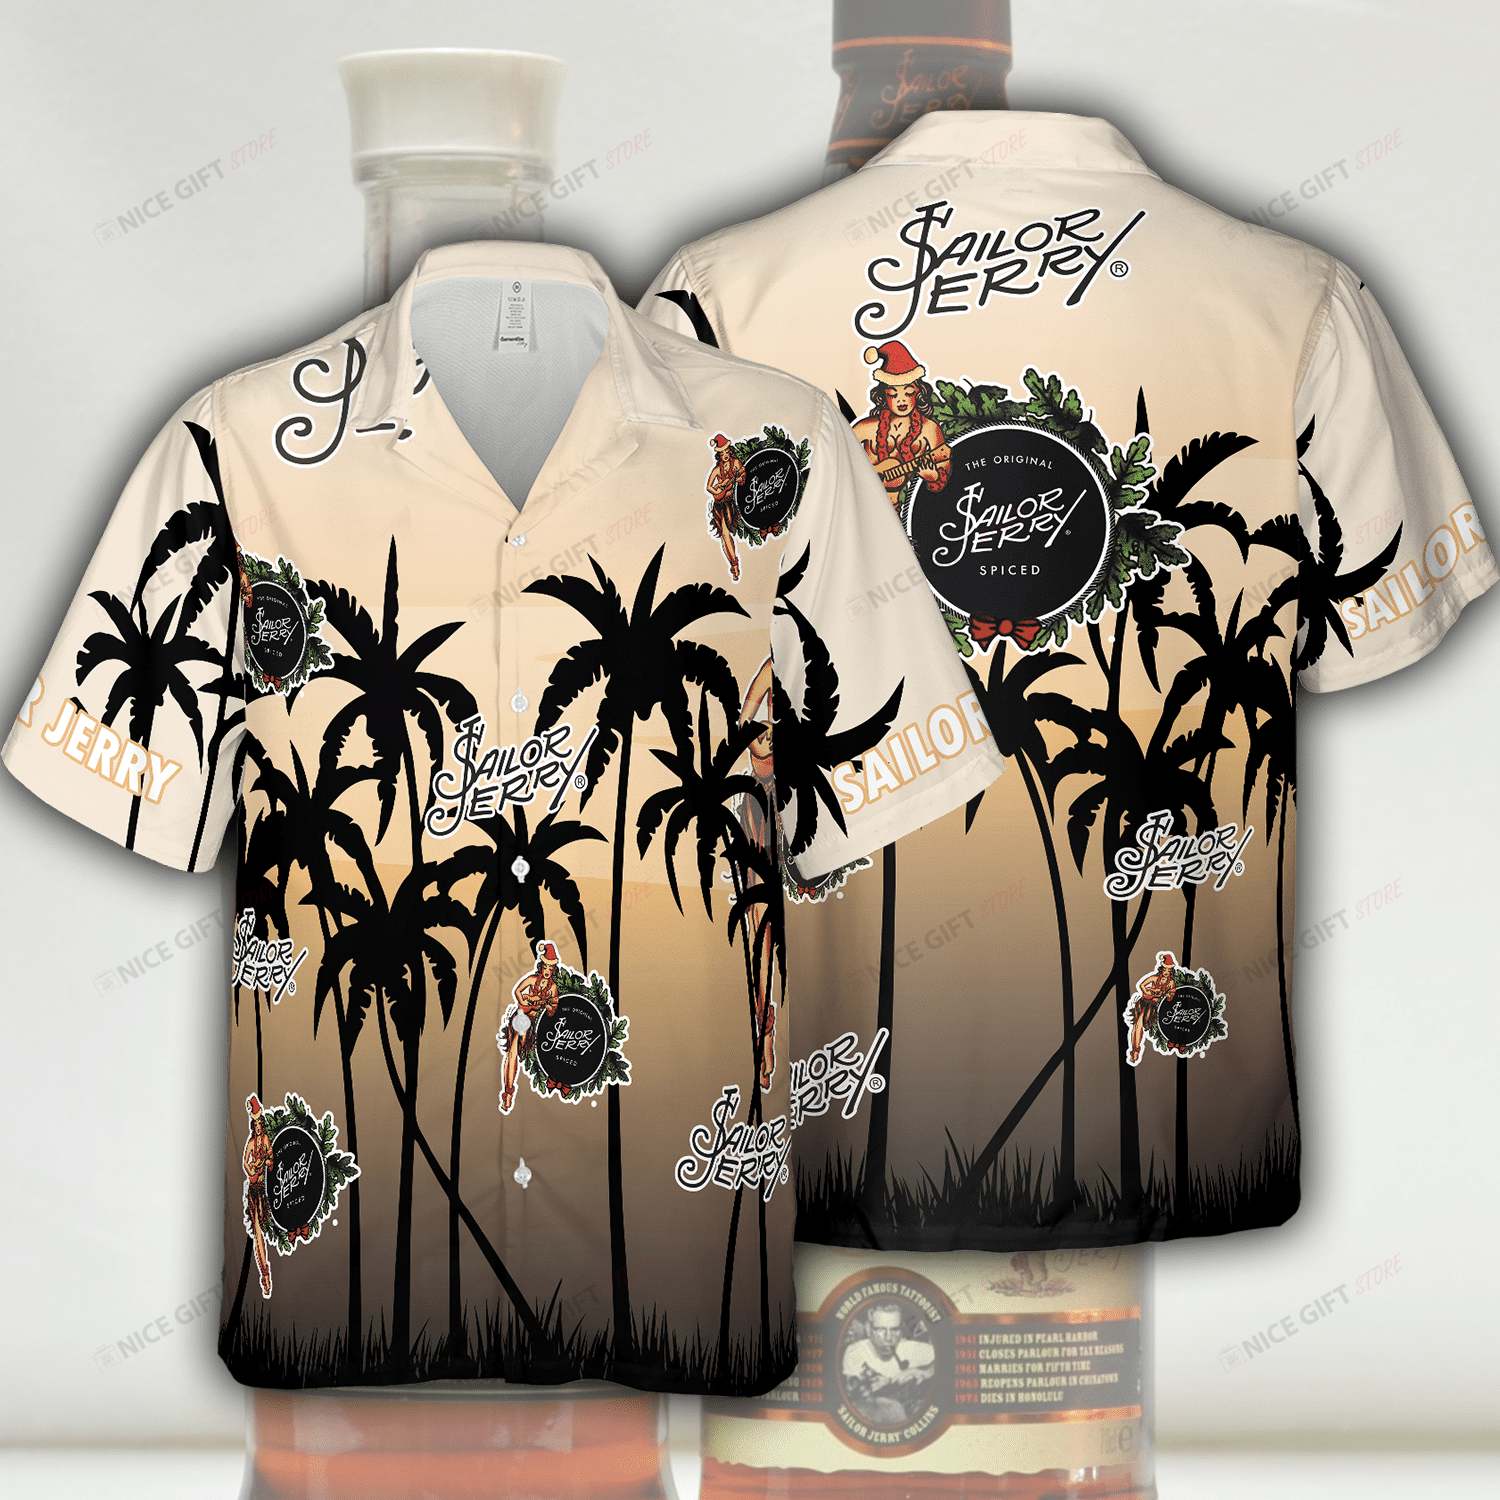 Shopping BEST Hawaiian shirt for your vacation below 163